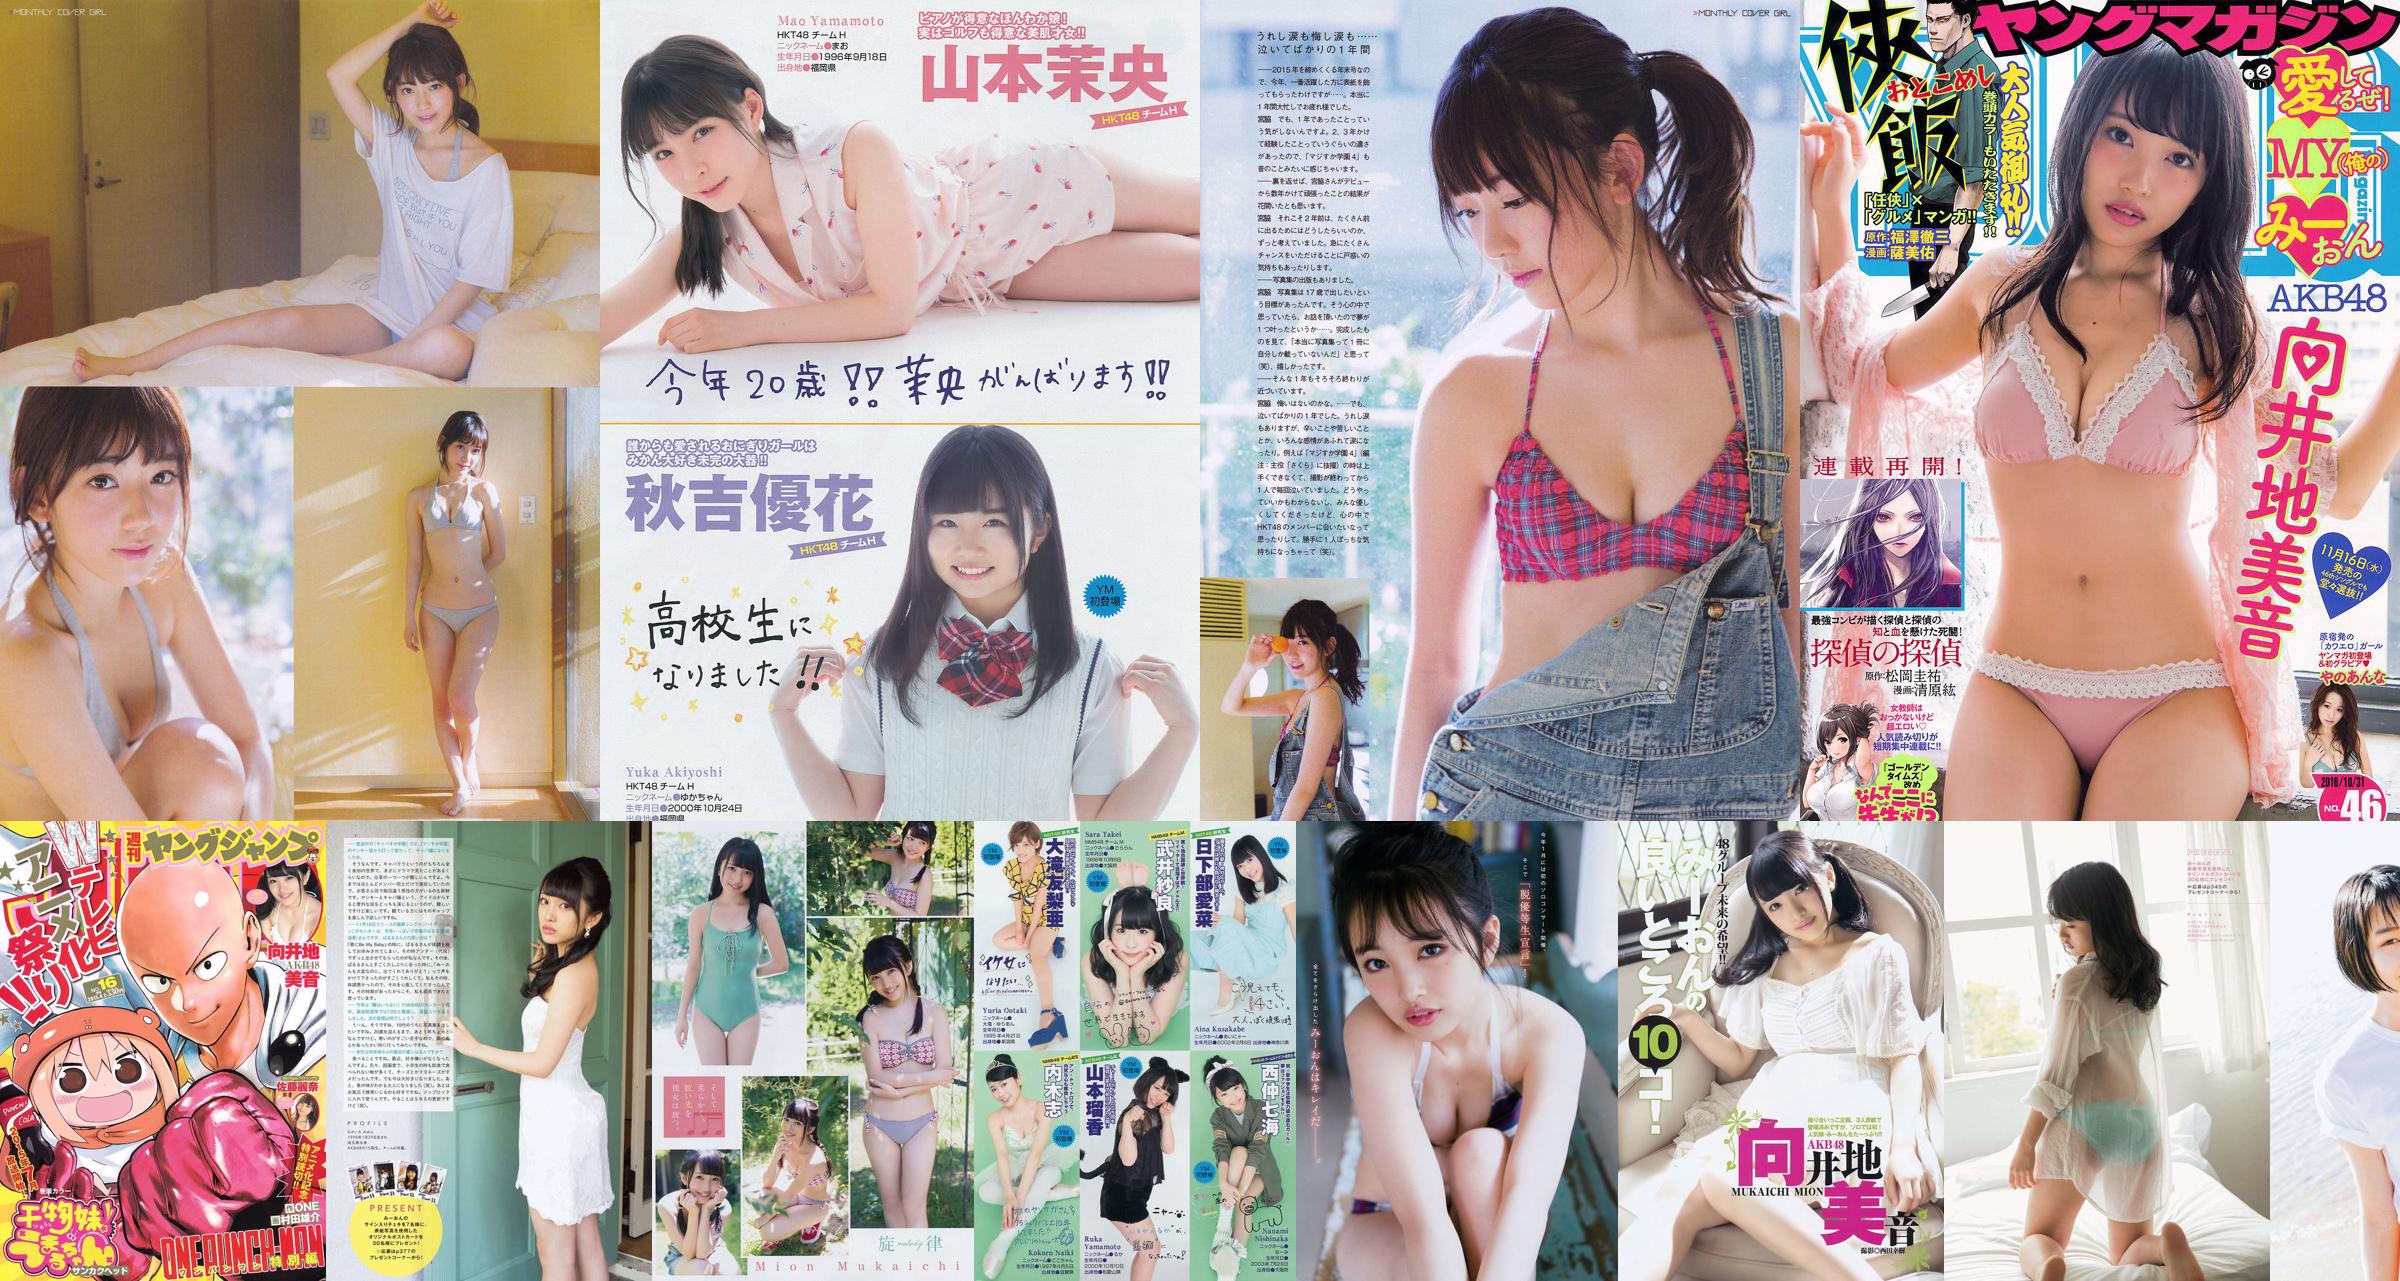 [Young Magazine] Mion Mukaichi Anna Yano 2016 No.46 Photograph No.70d07e Page 1